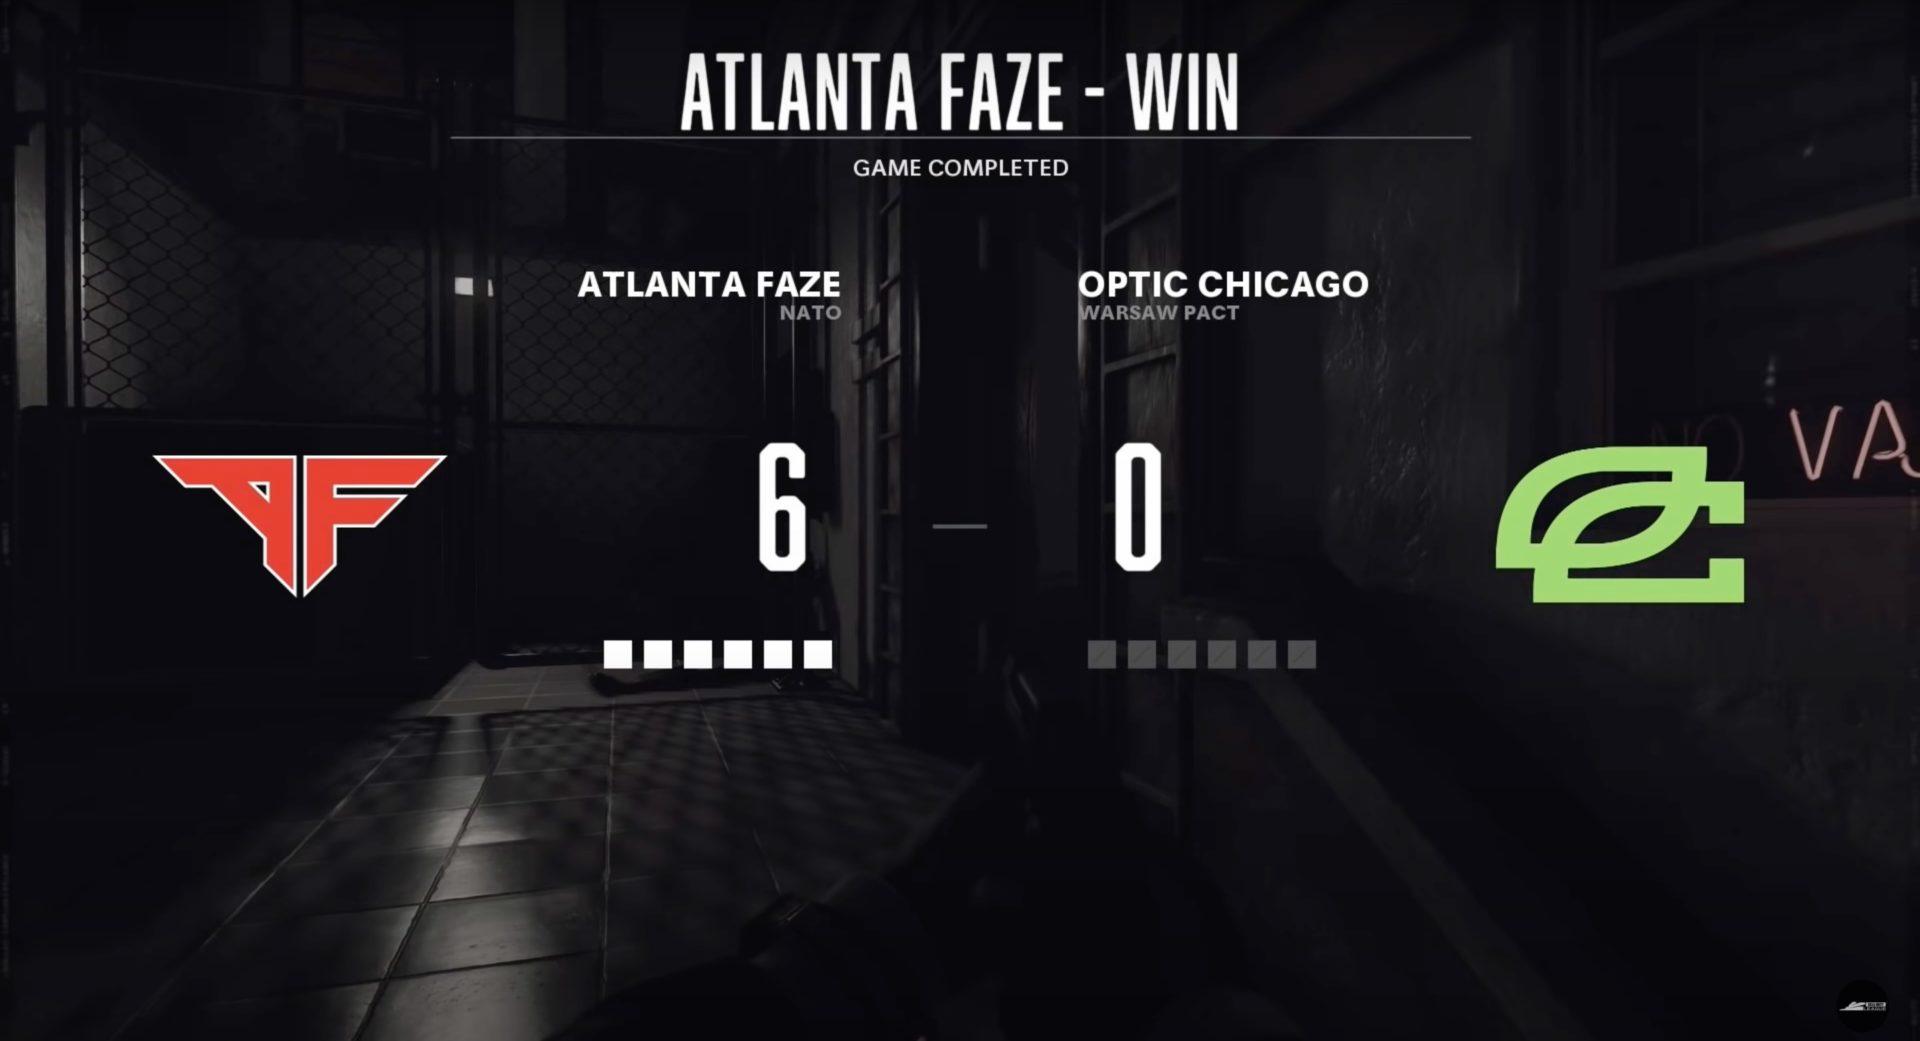 Atlanta FaZe beat OpTic Chicago 6-0 on Miami Search and Destroy